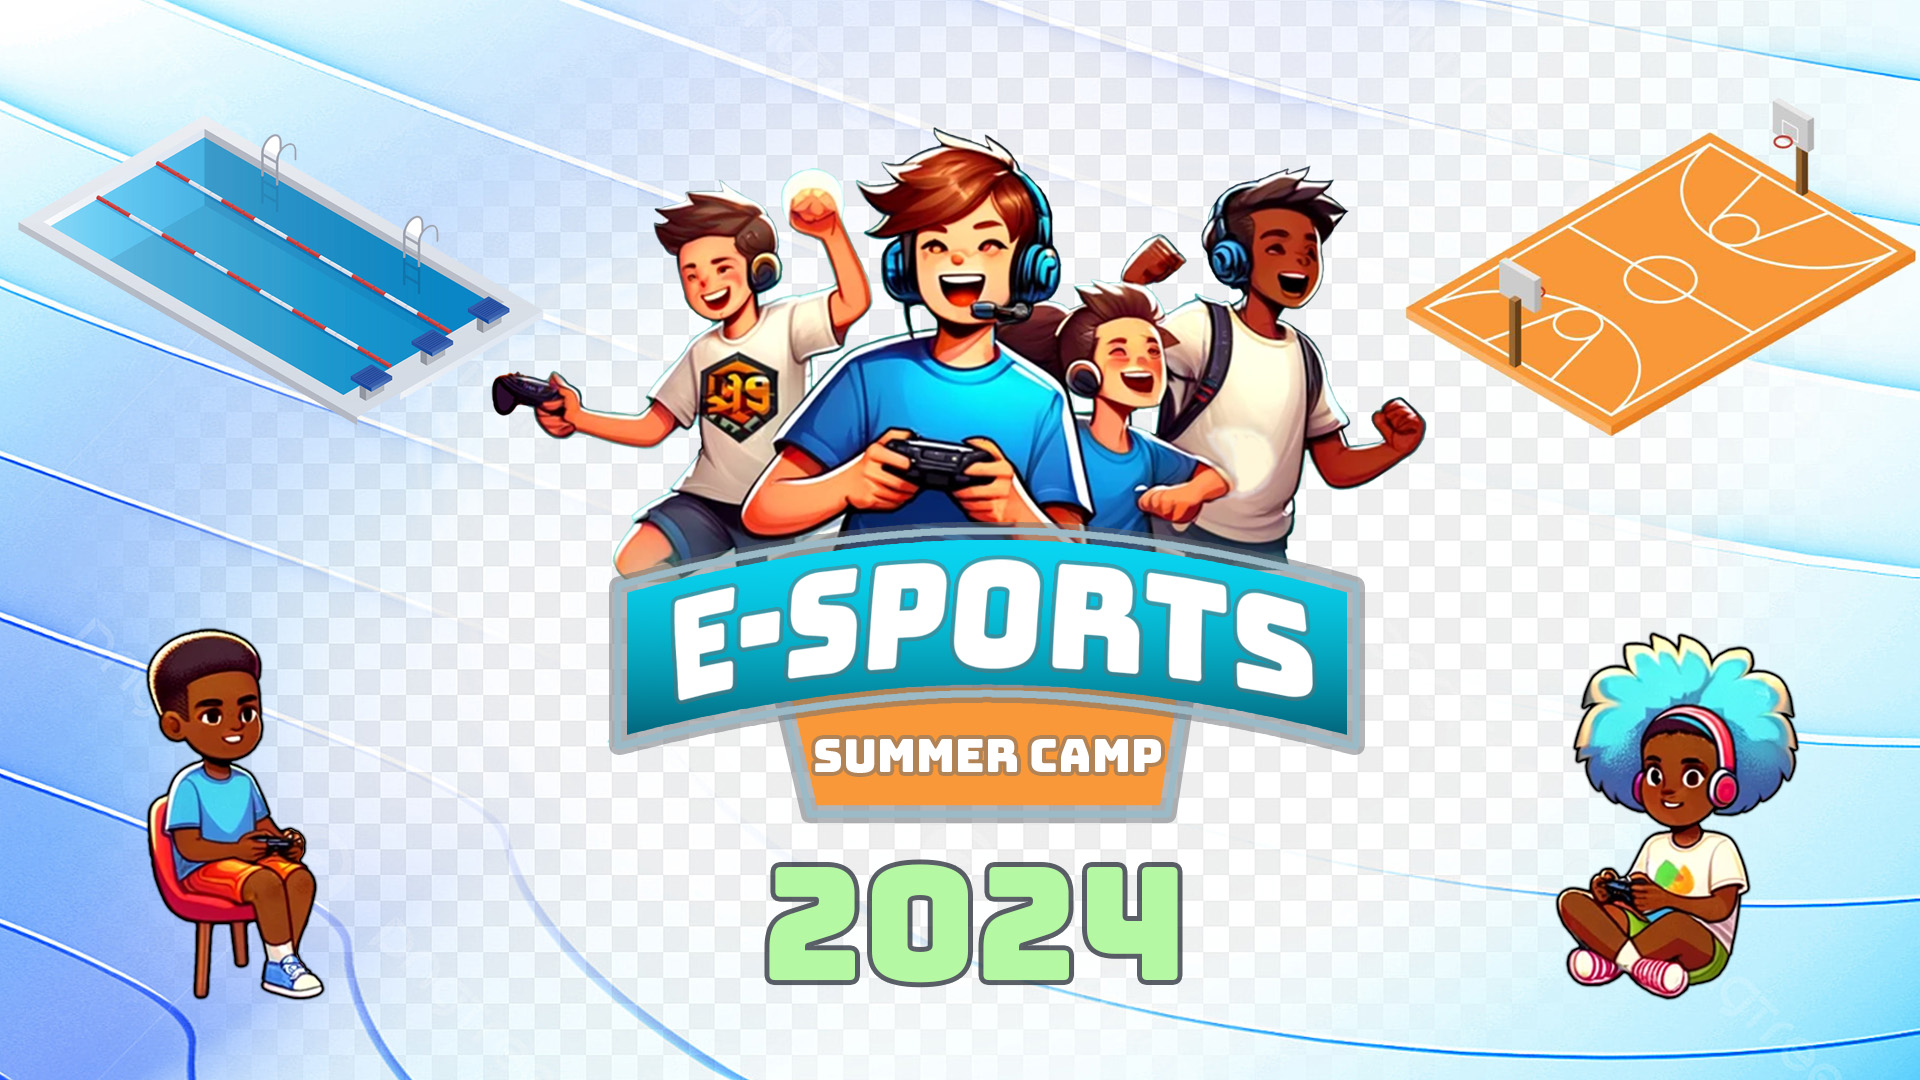 E-Sports Summer Camp 2024